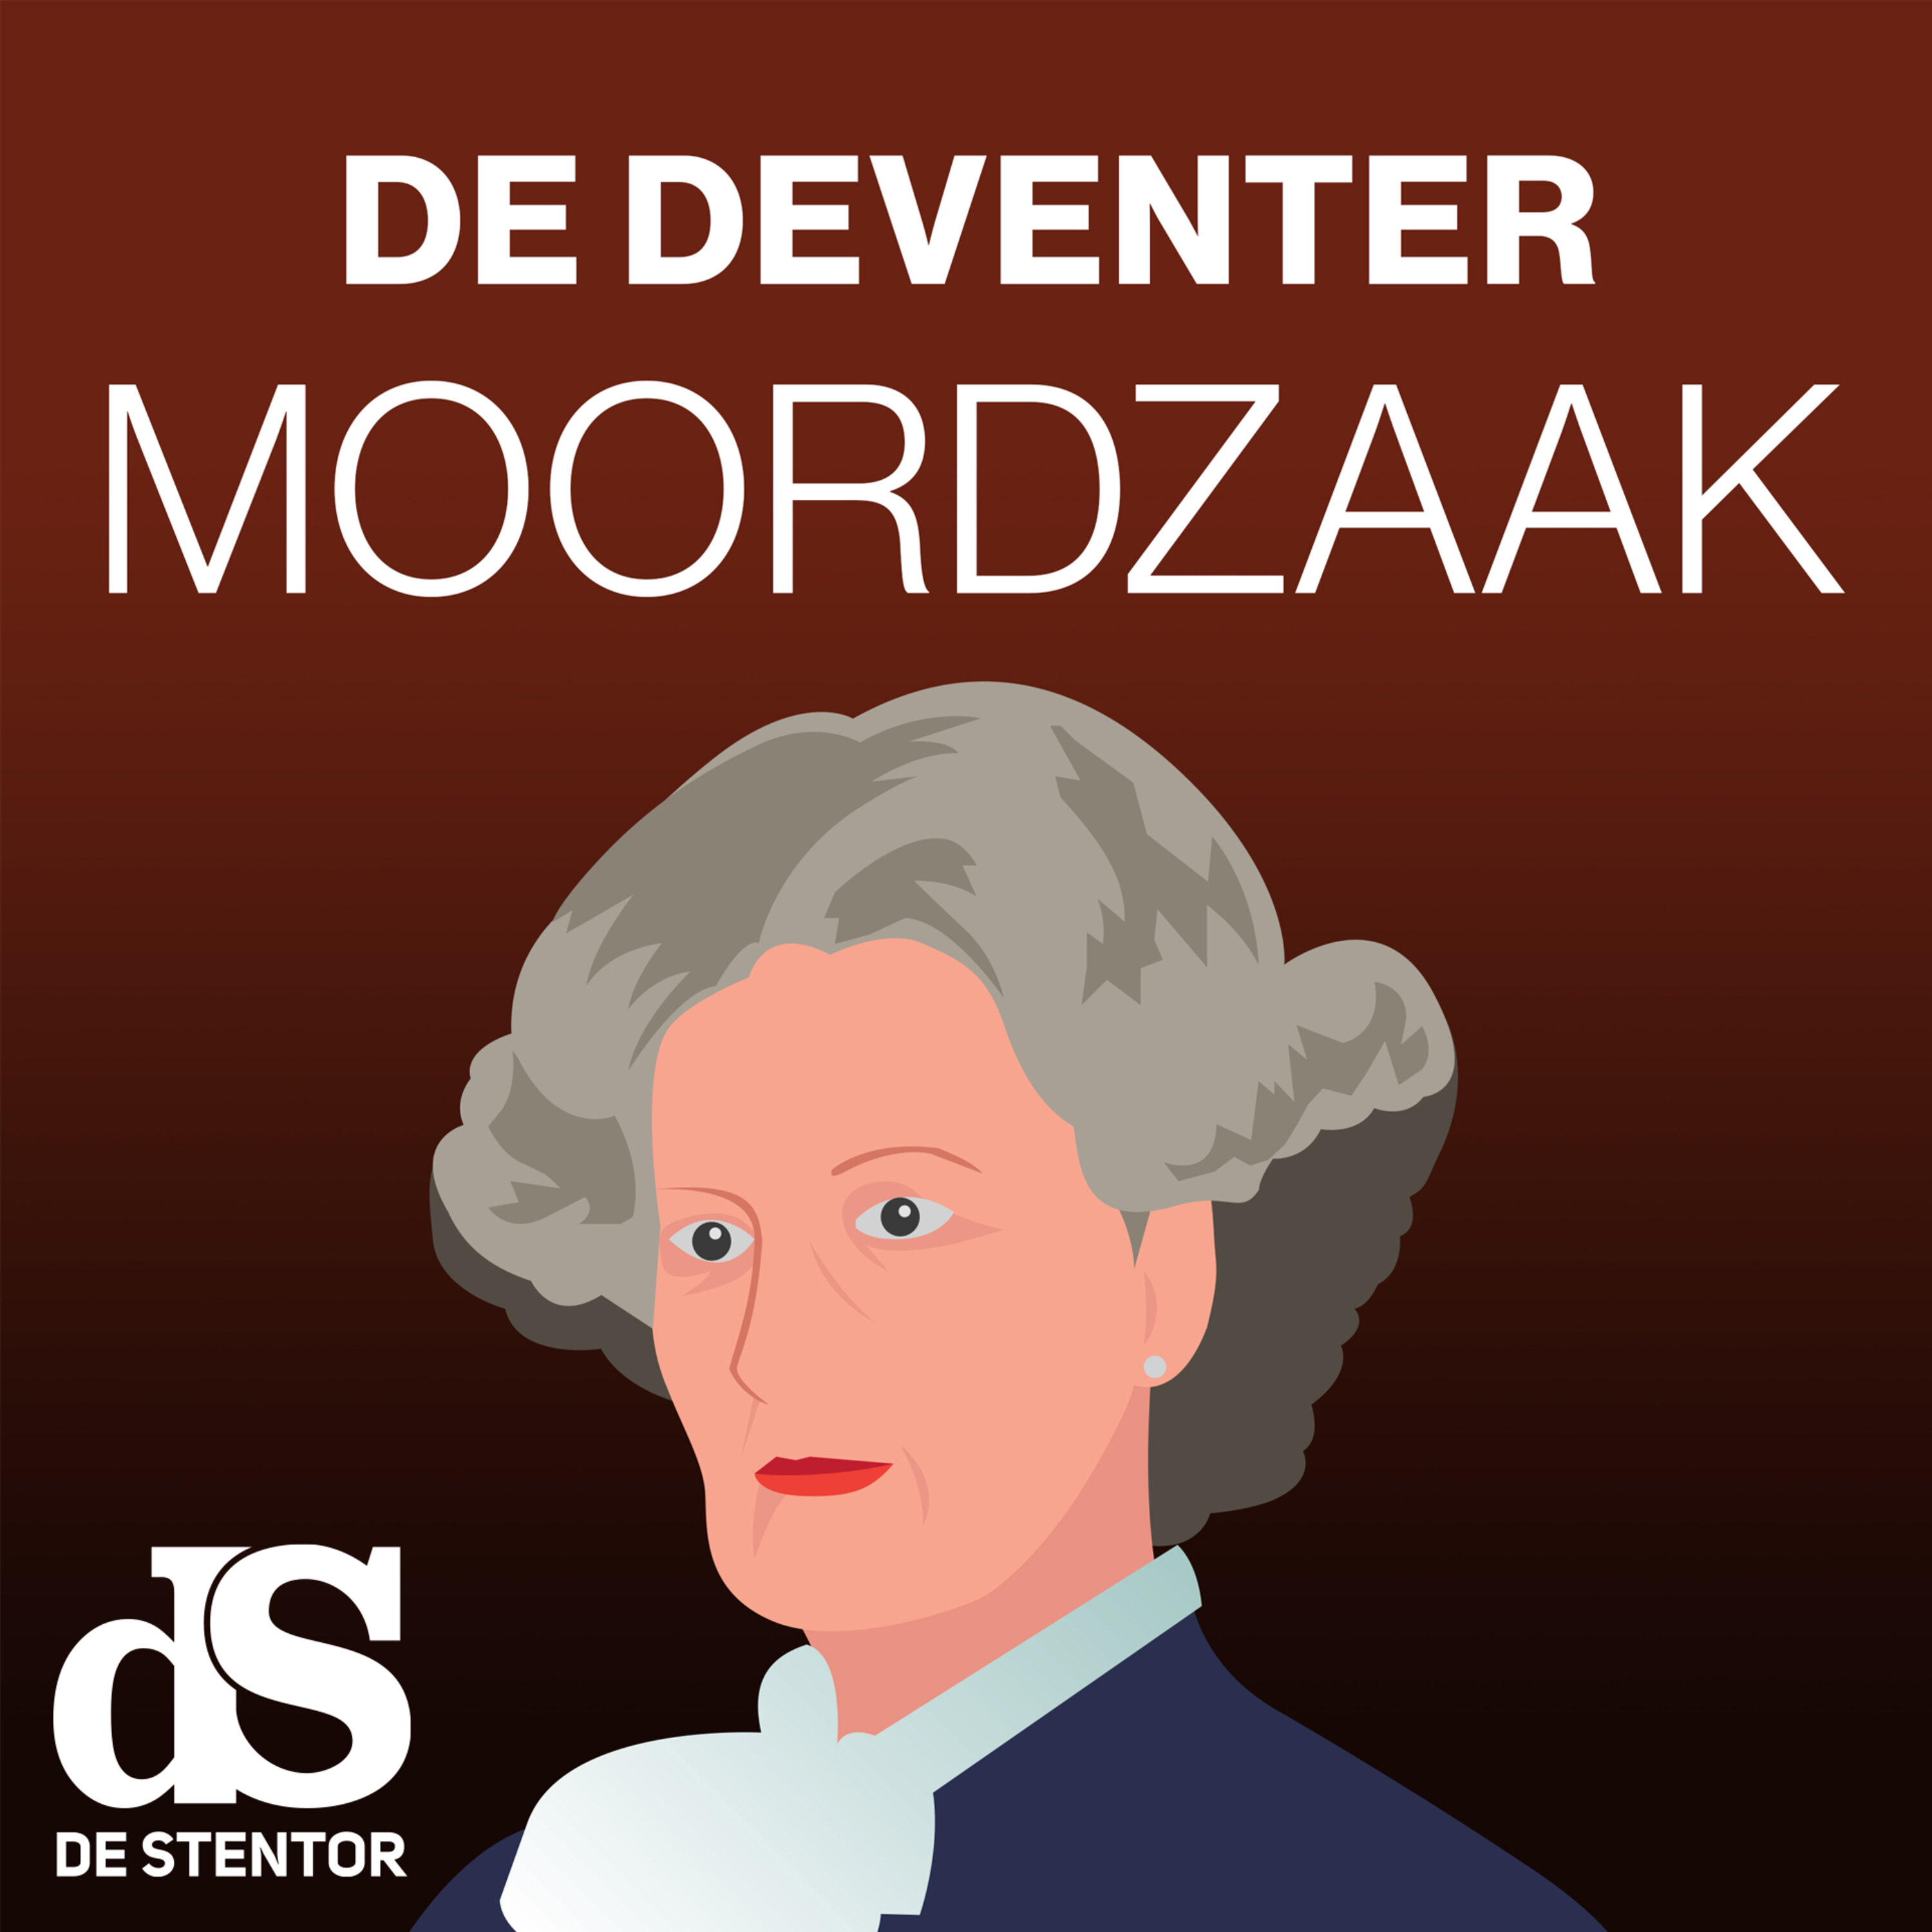 De Deventer Moordzaak logo